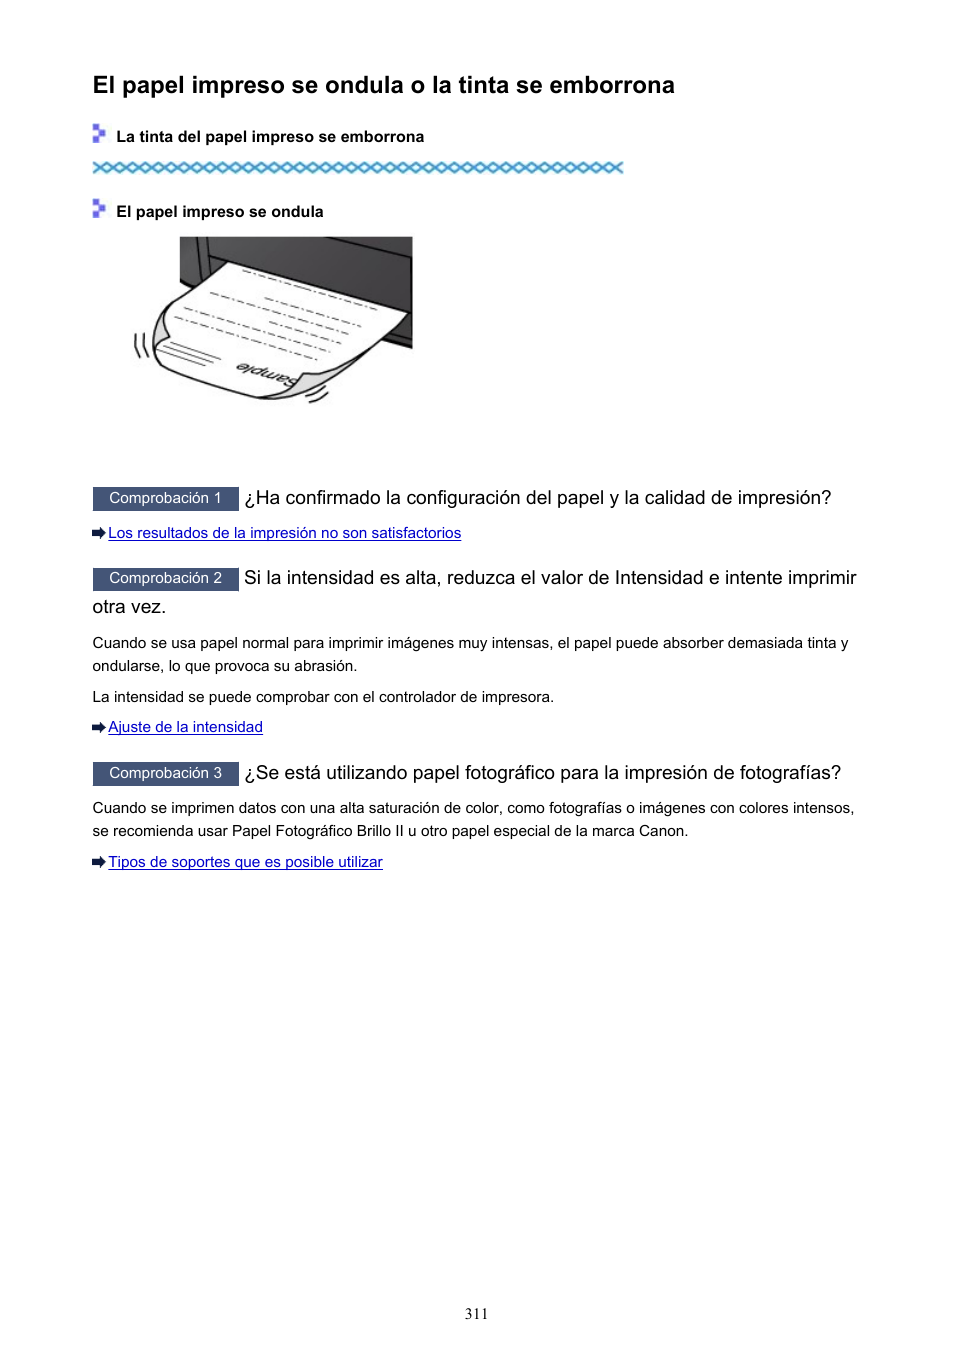 El papel impreso se ondula o la tinta se emborrona | Canon PIXMA iP8750 Manual del usuario | Página 311 / 421